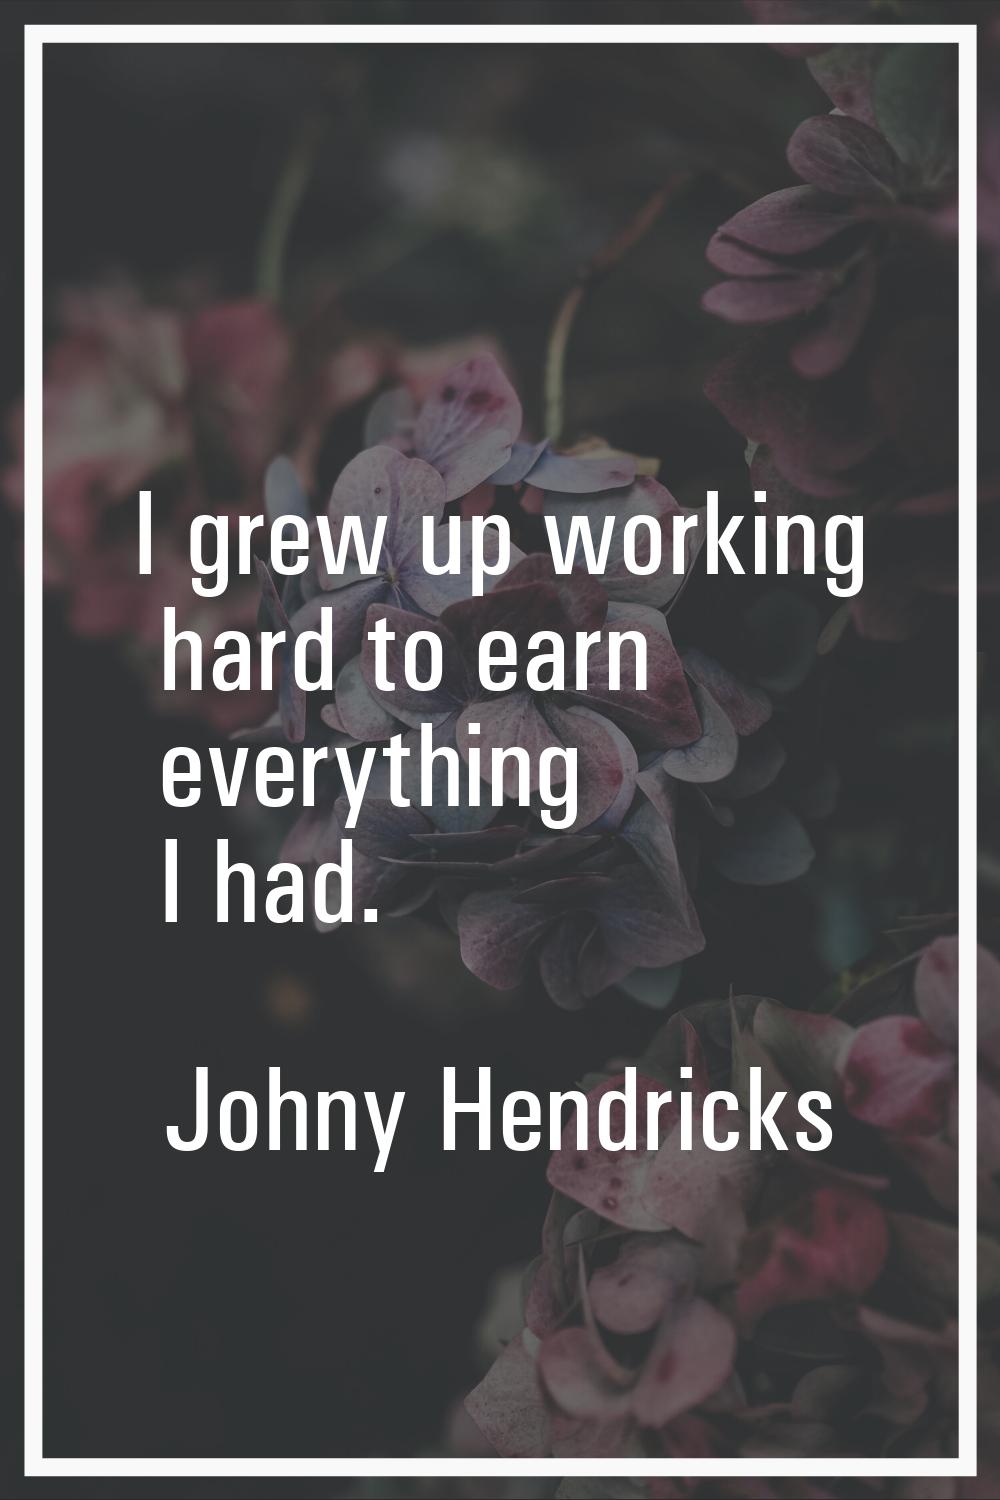 I grew up working hard to earn everything I had.